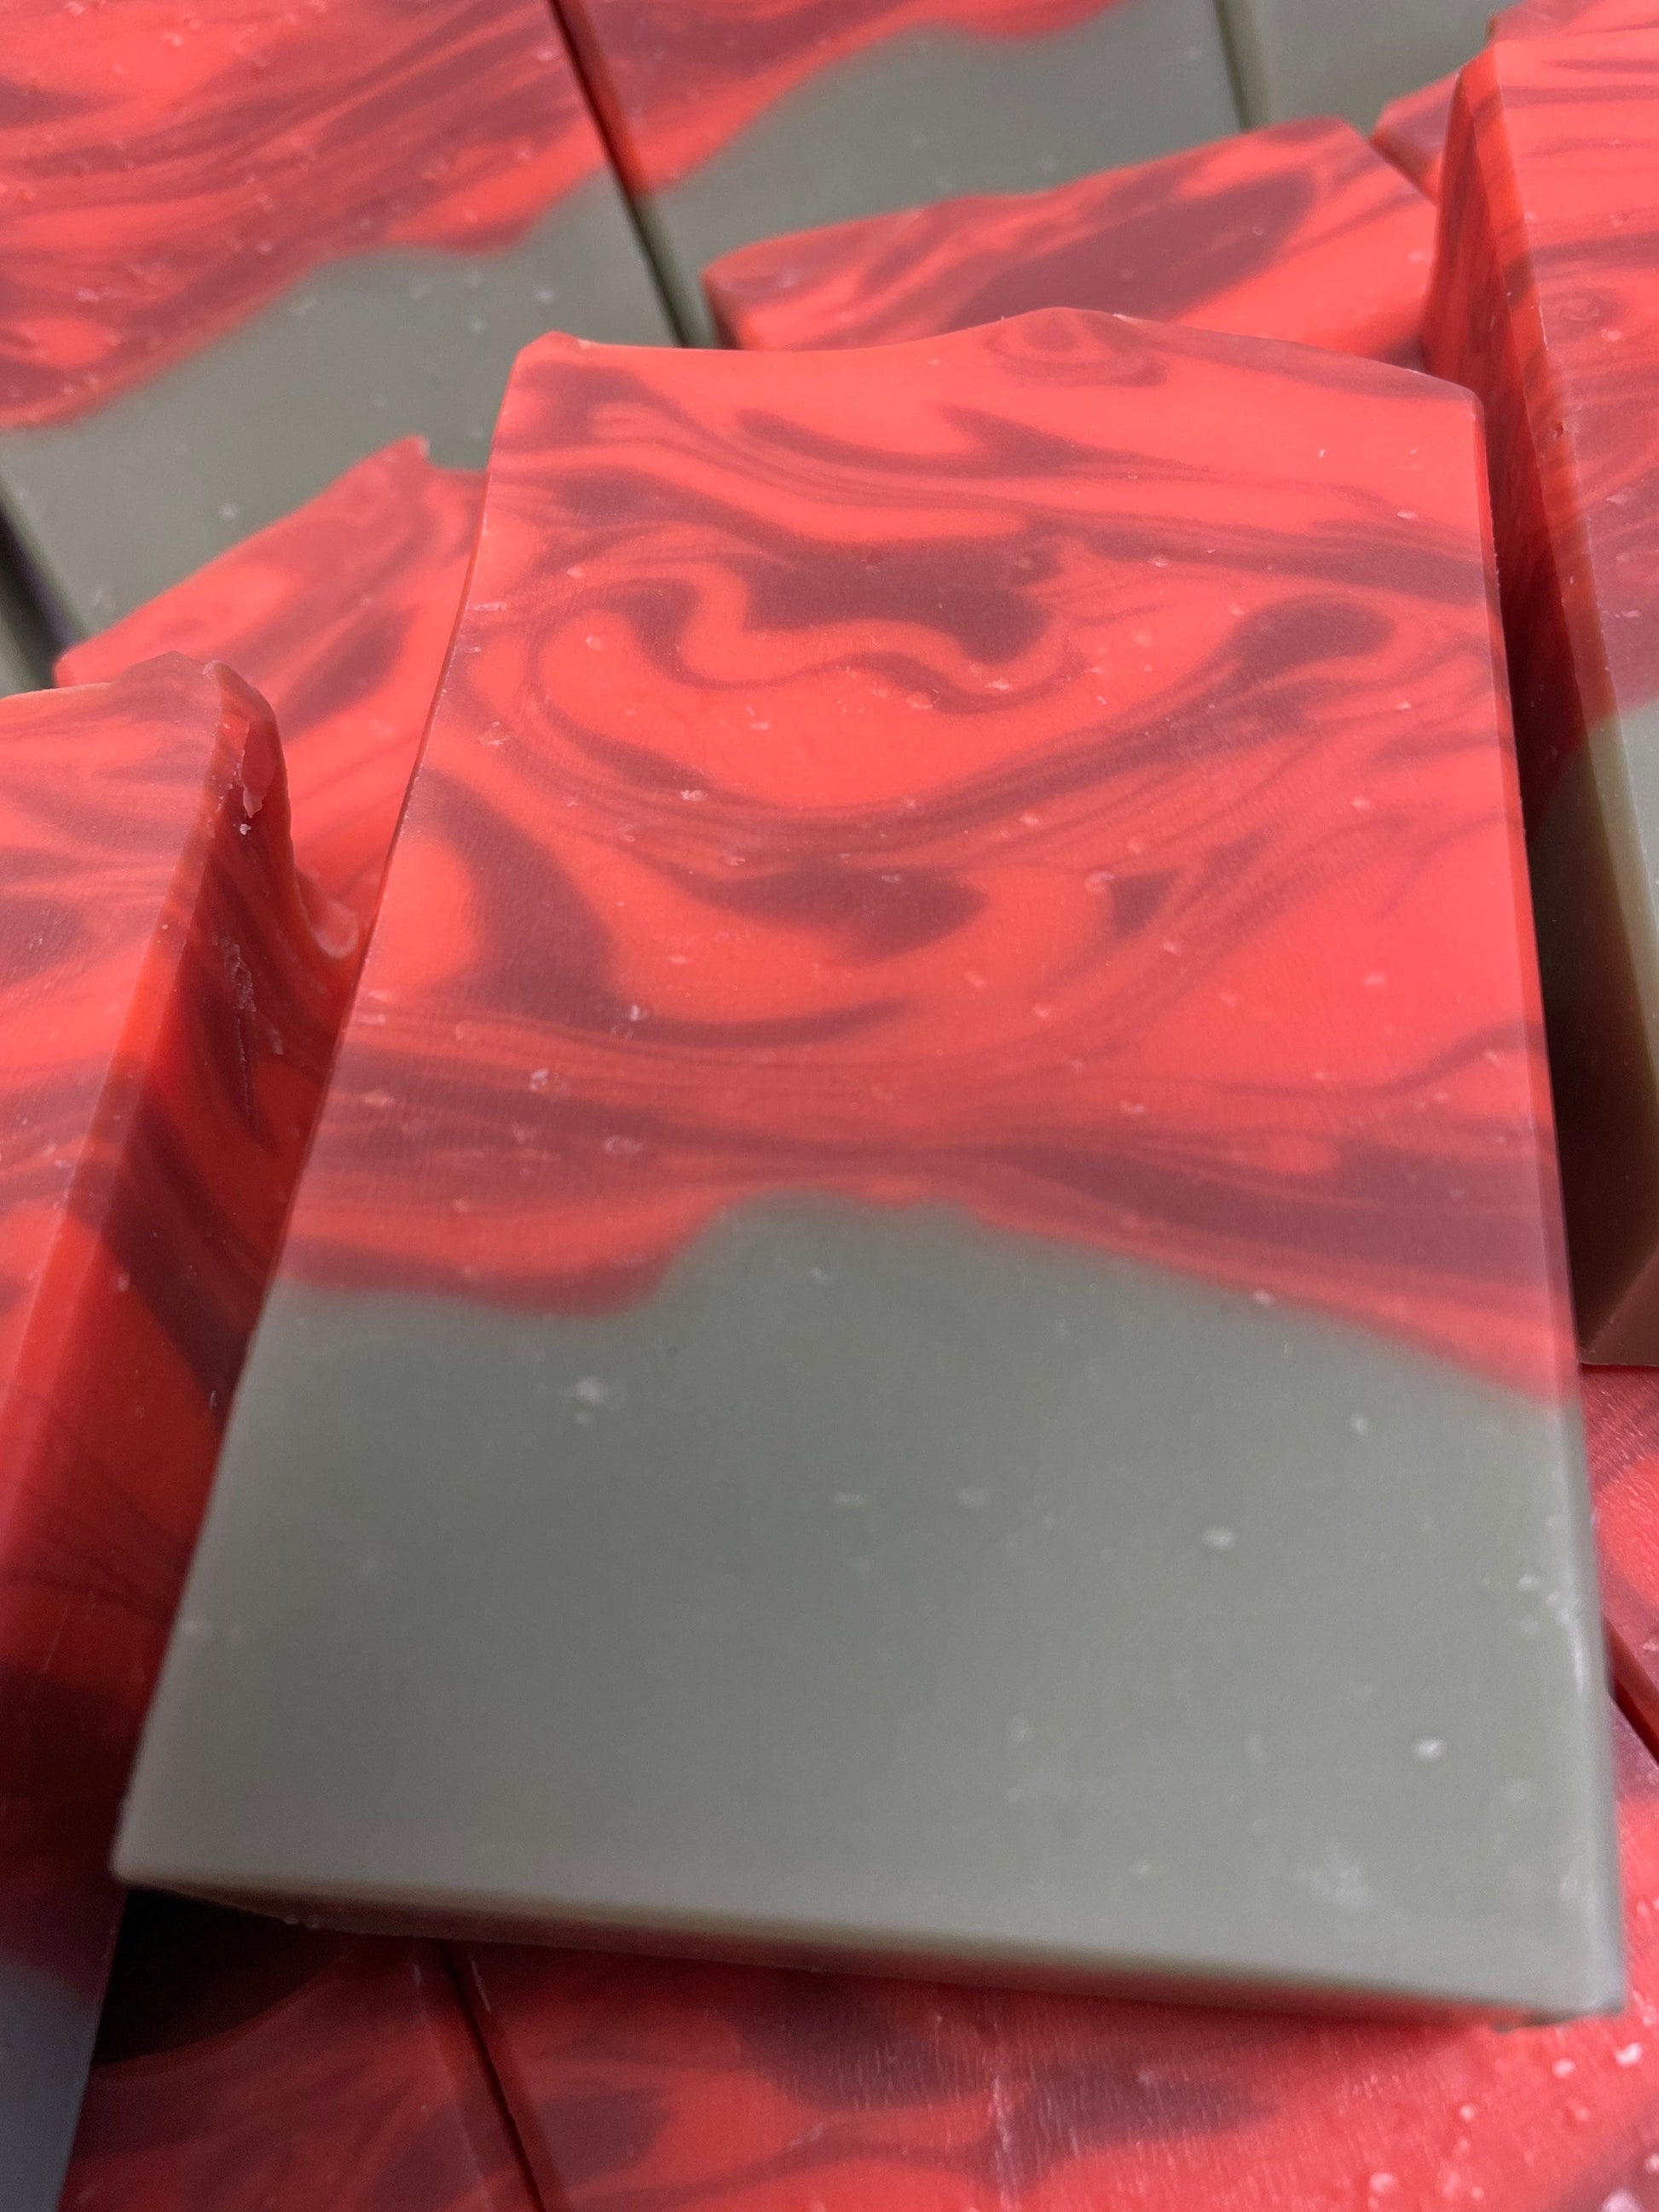 A photo of several Cranberry Orange Soap bar soap.